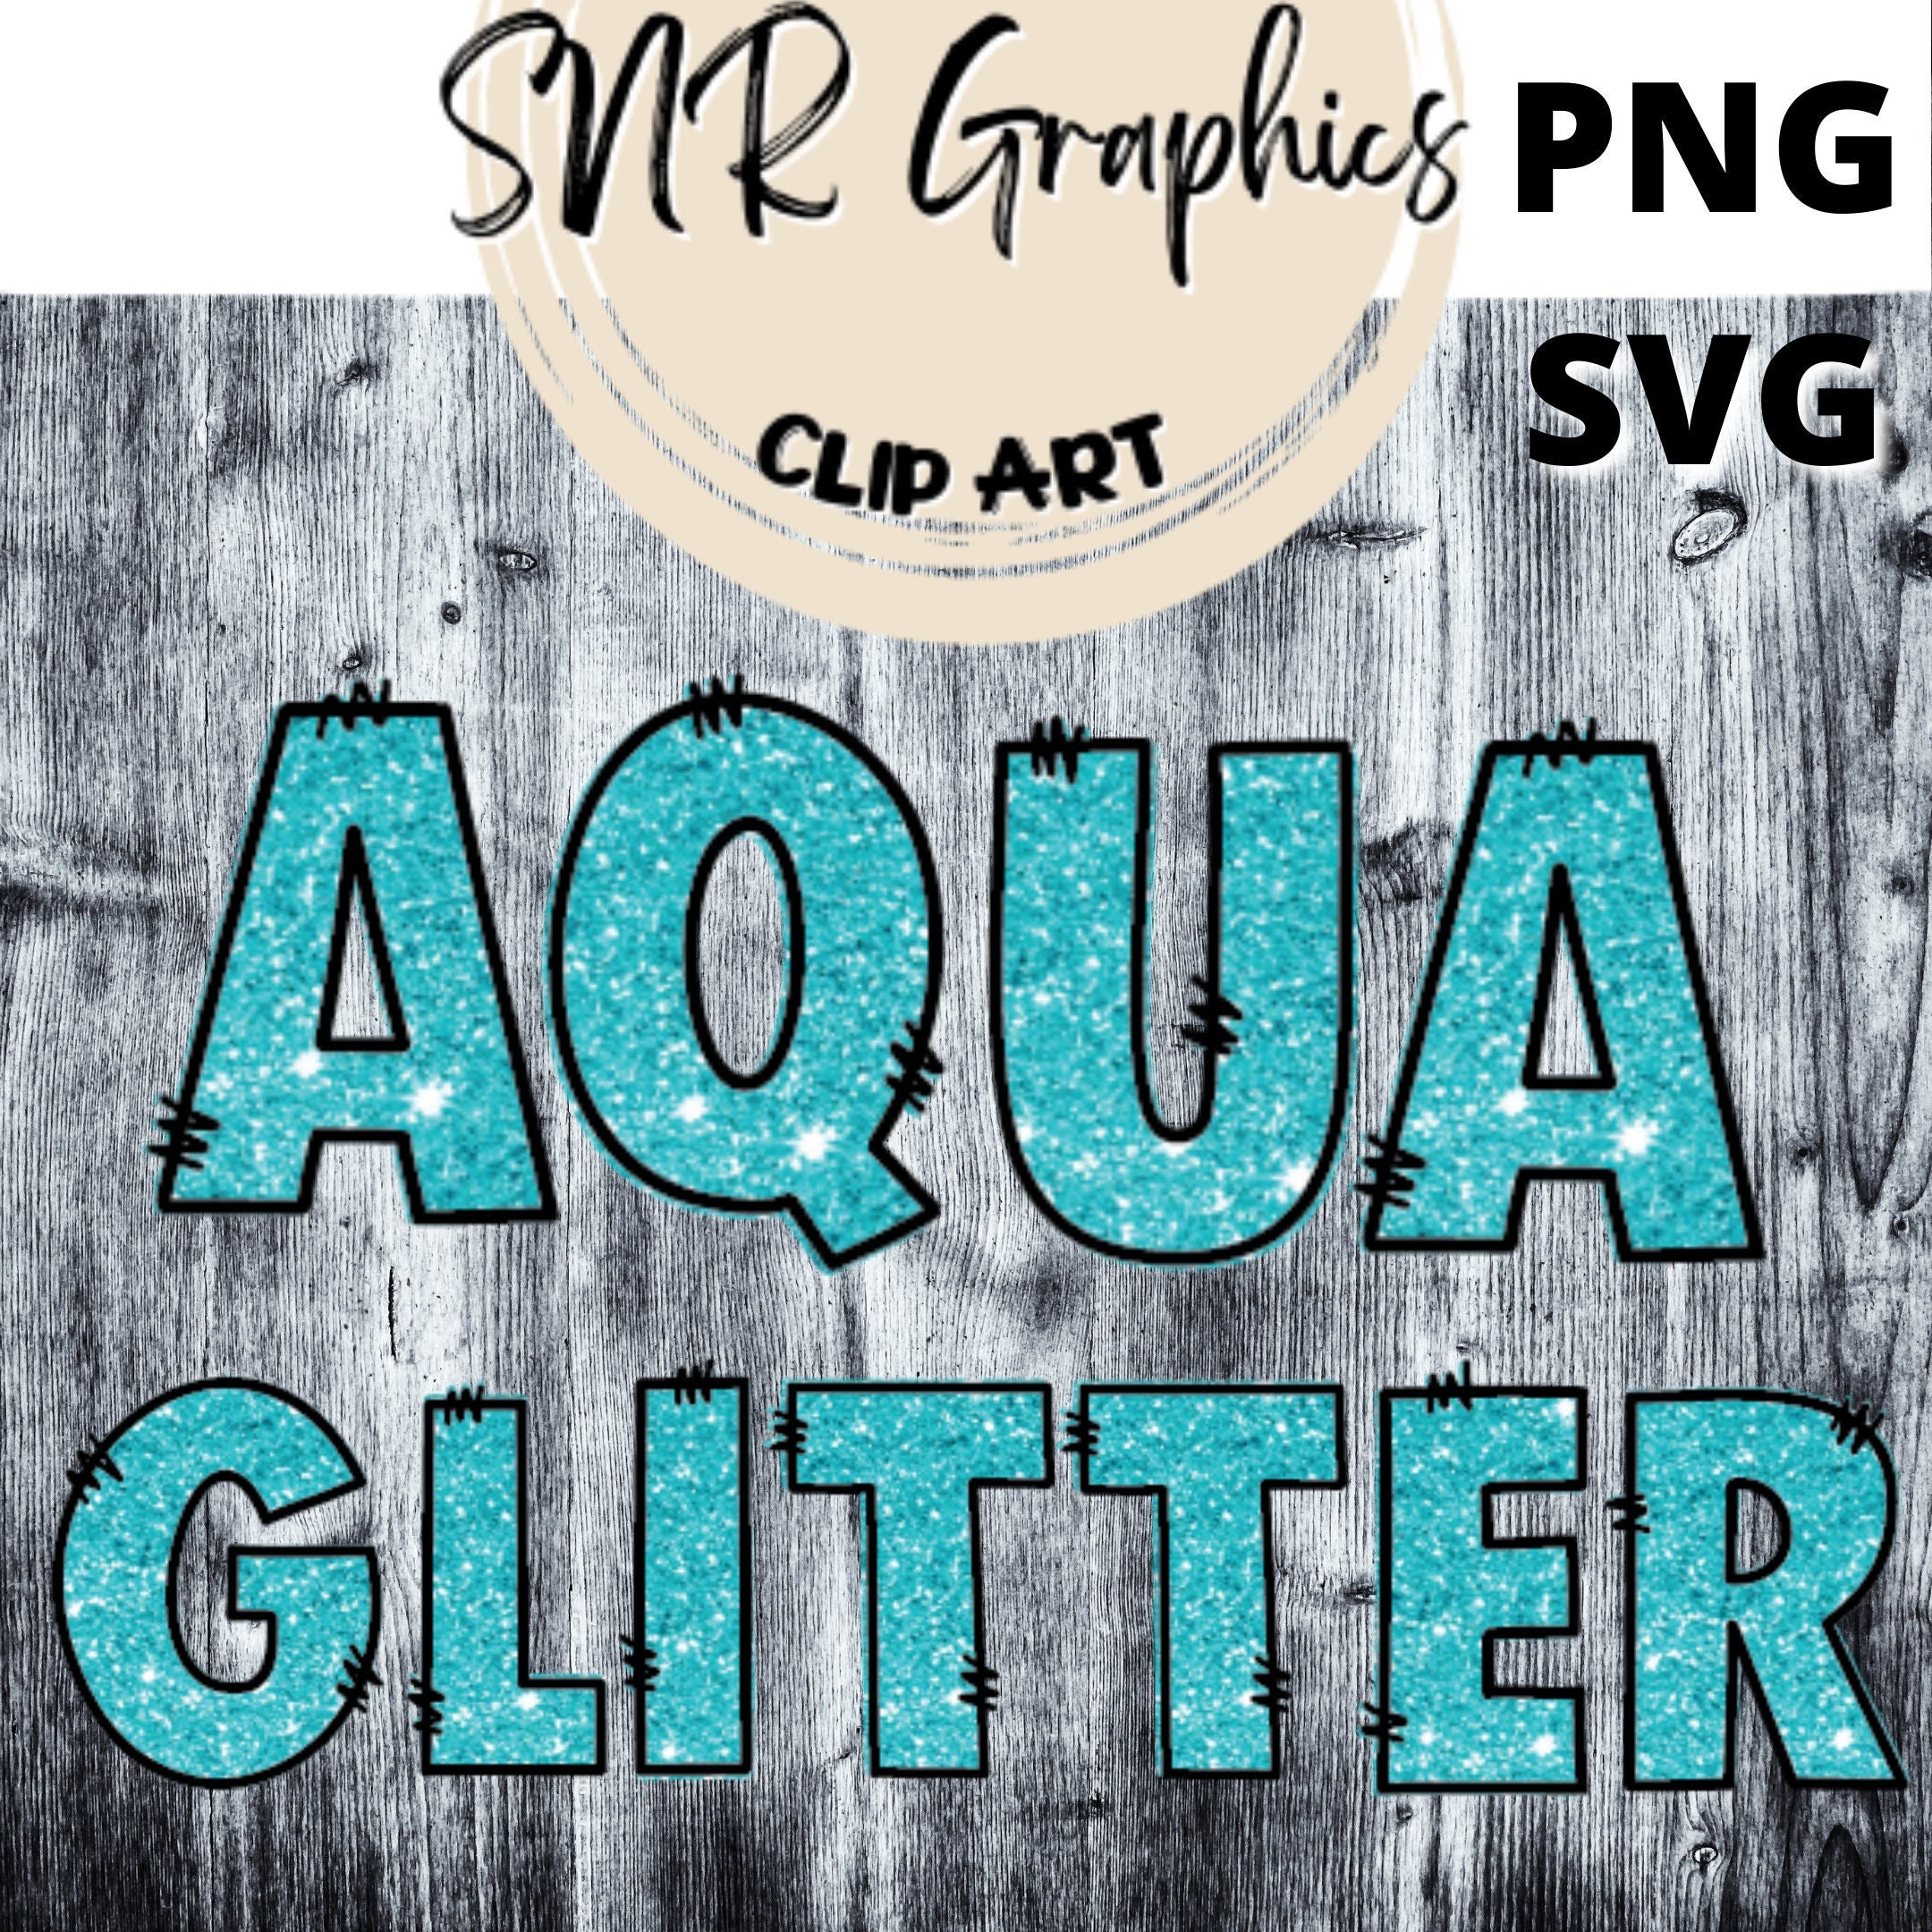 Glitter Cursive Alphabet Letter Stickers, 1-Inch, 50-Count Aqua